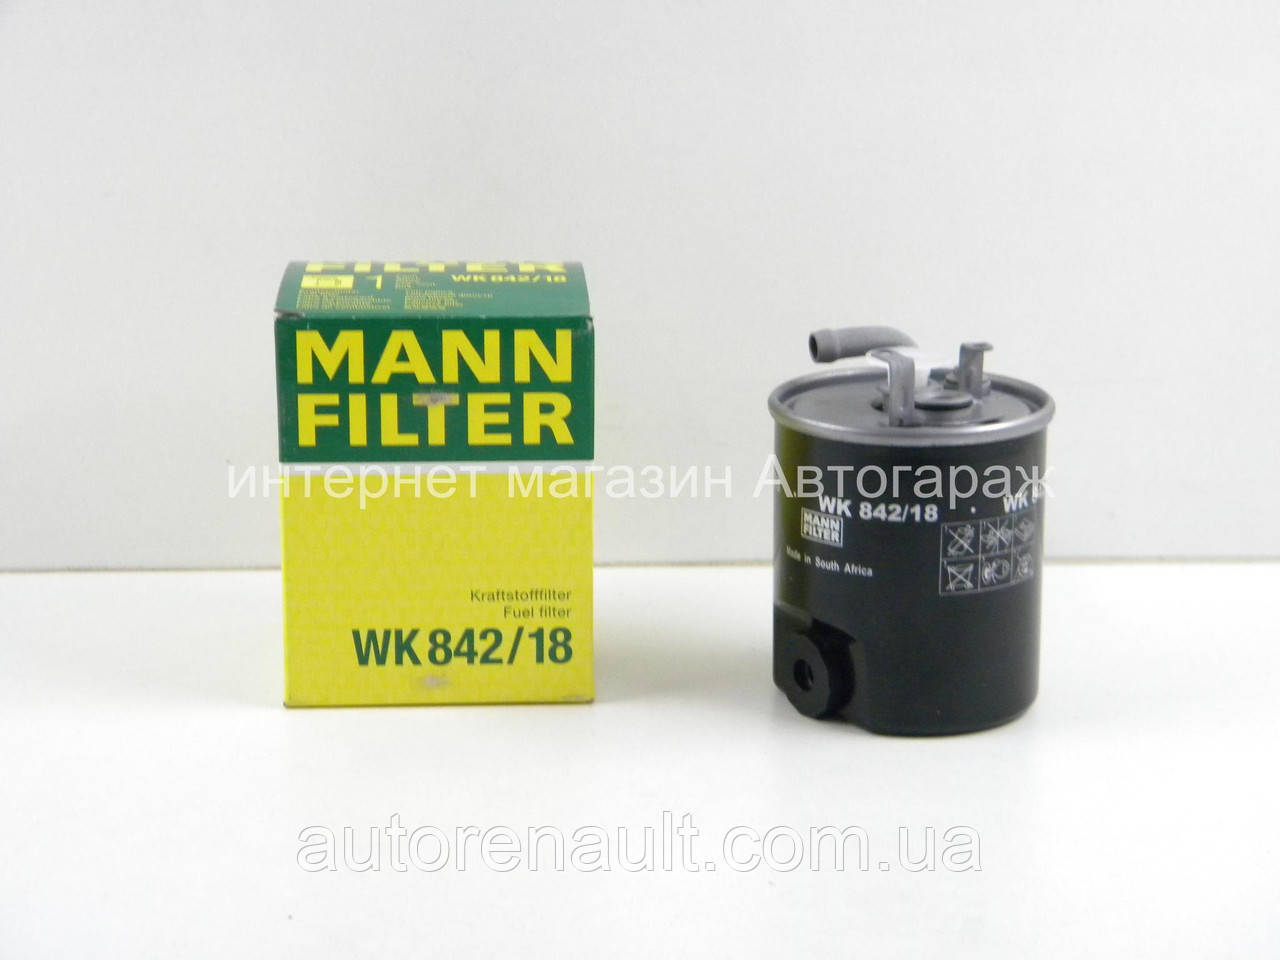 Mann Filter WK84218 Kraftstofffilter 